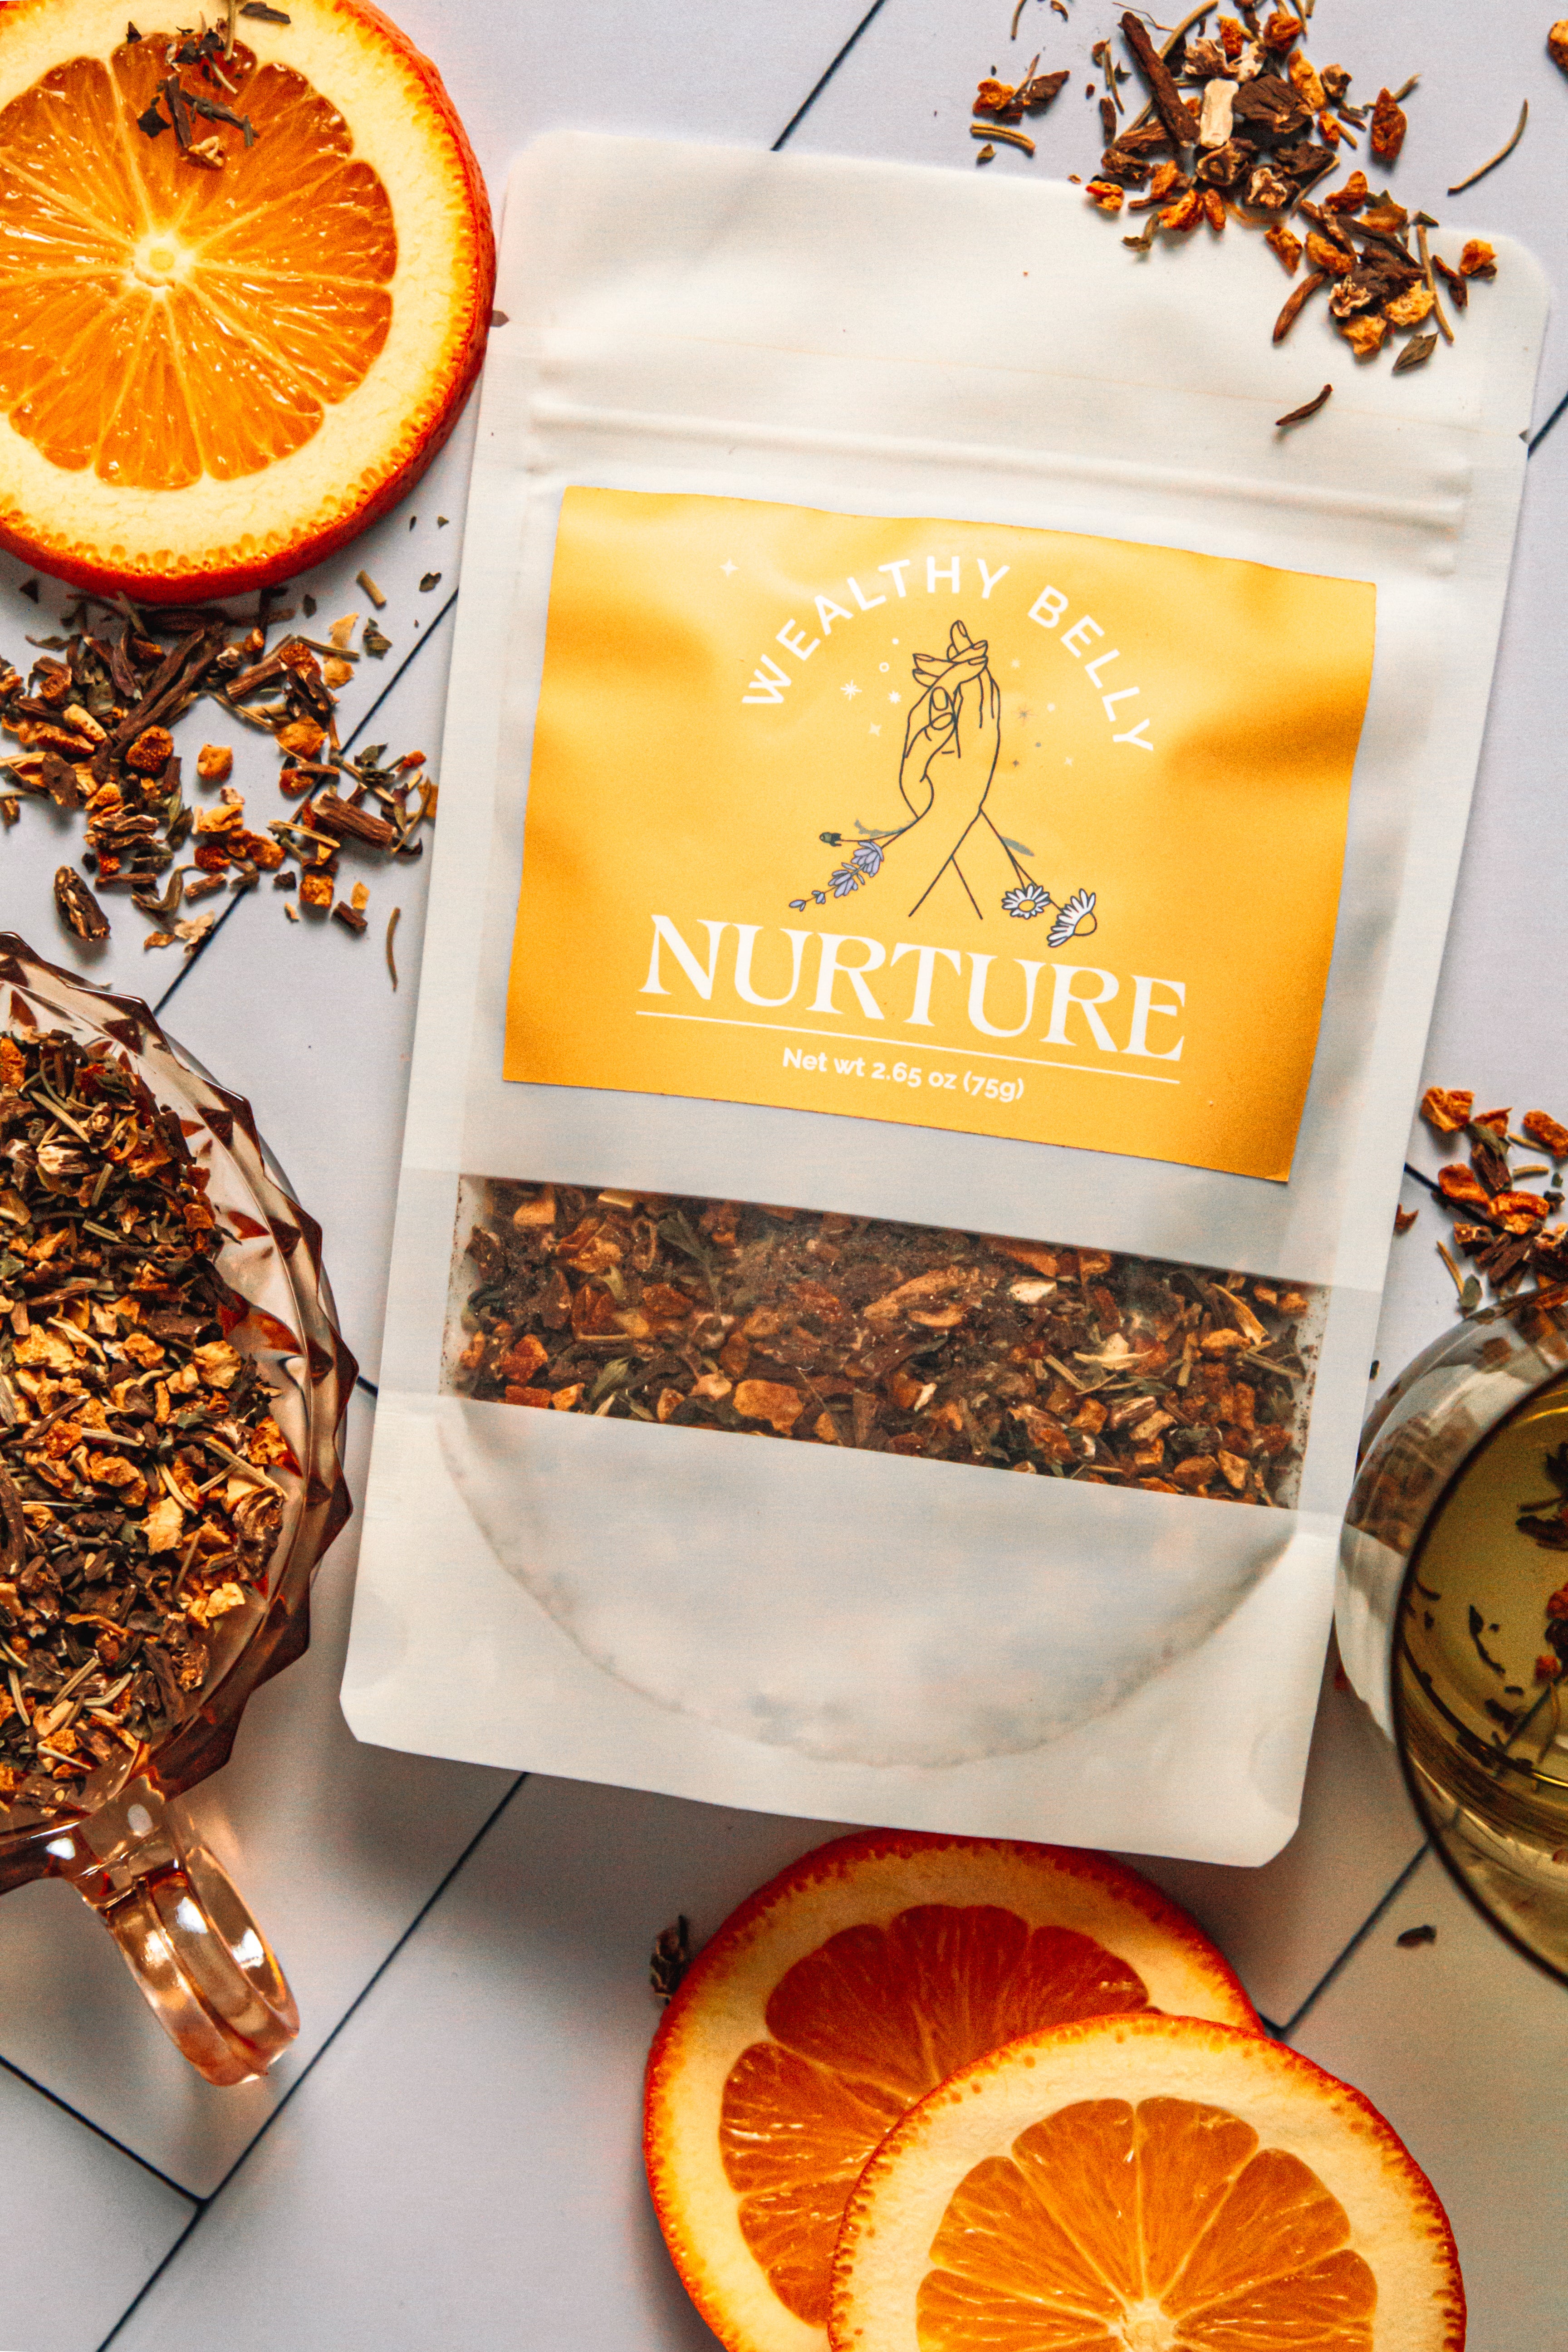 Nurture herbal tea. Organic herbal tea. Coffee replacement, caffeine-free. Dandelion root, dried orange peel, lemon balm, rosemary. Tea for digestion. Tea for energy.